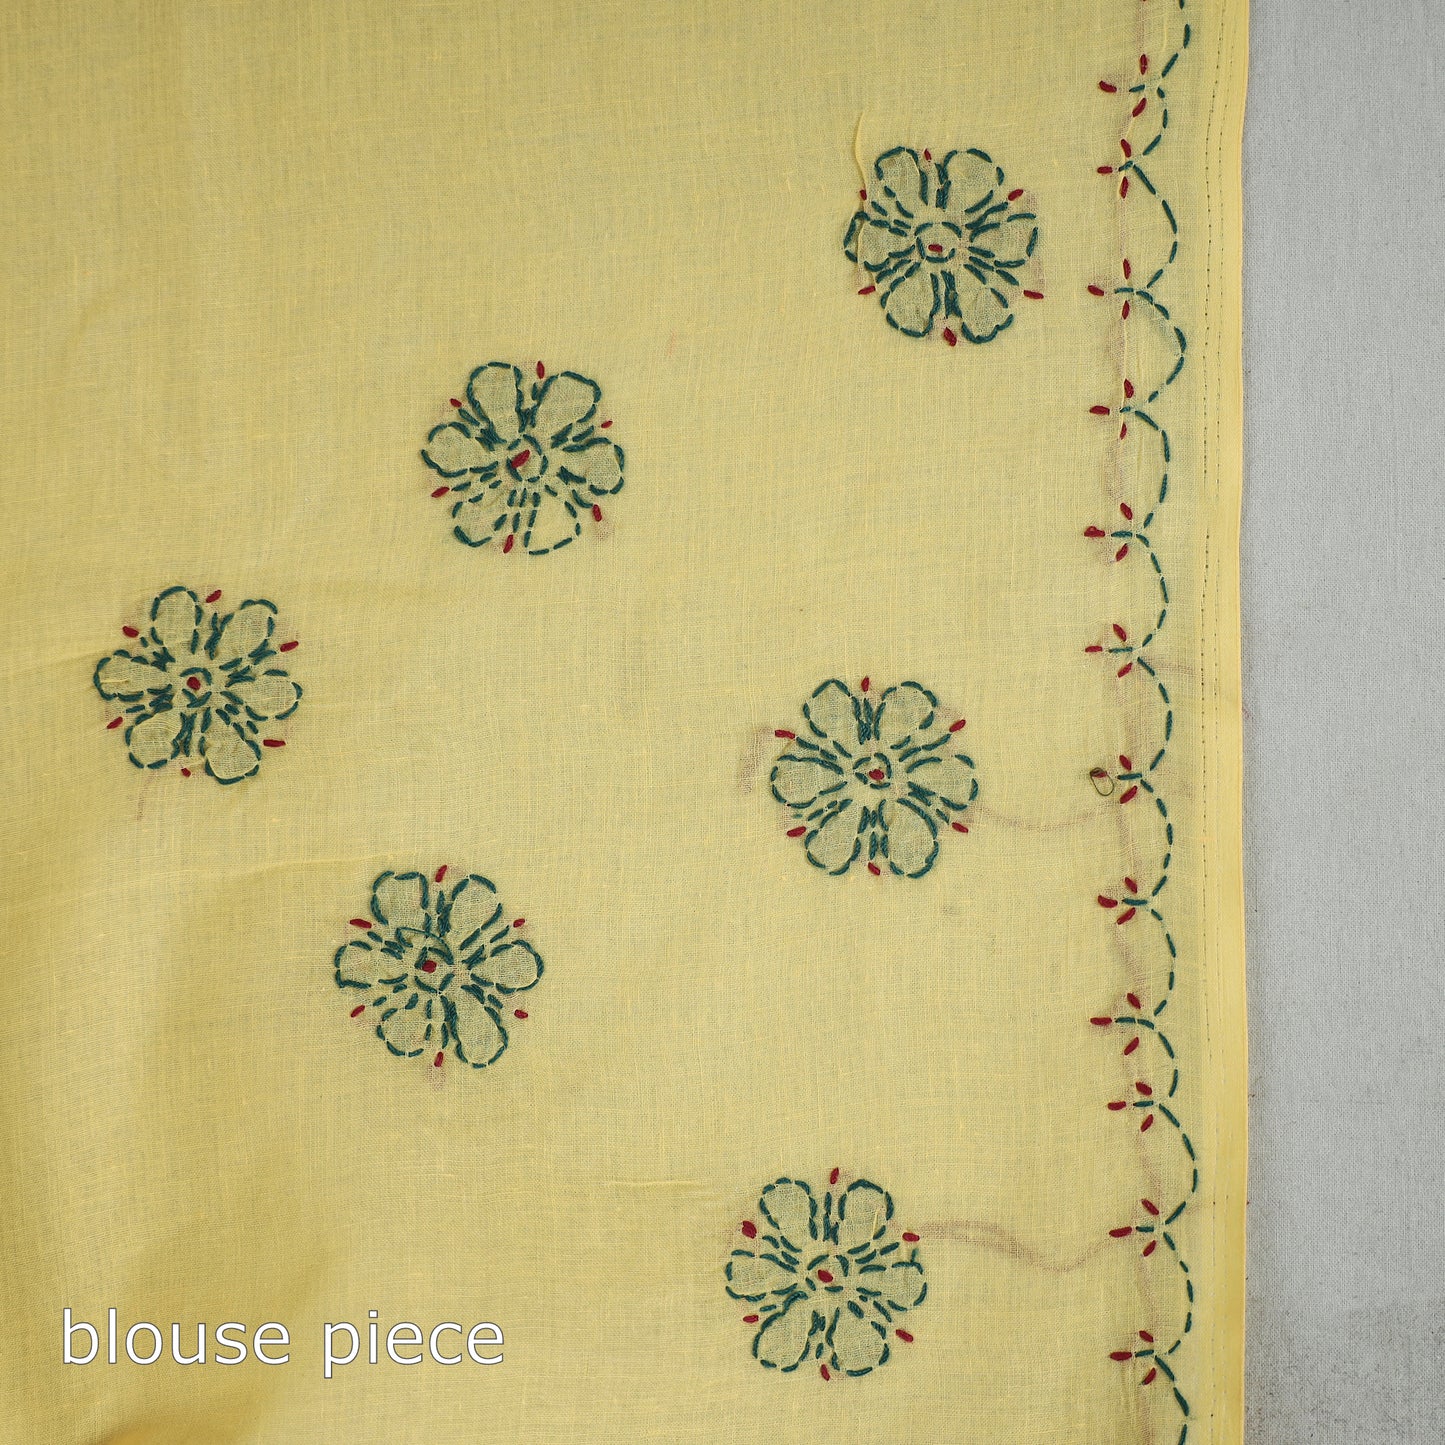 Yellow - Lucknow Chikankari Hand Embroidery Cotton Saree 55